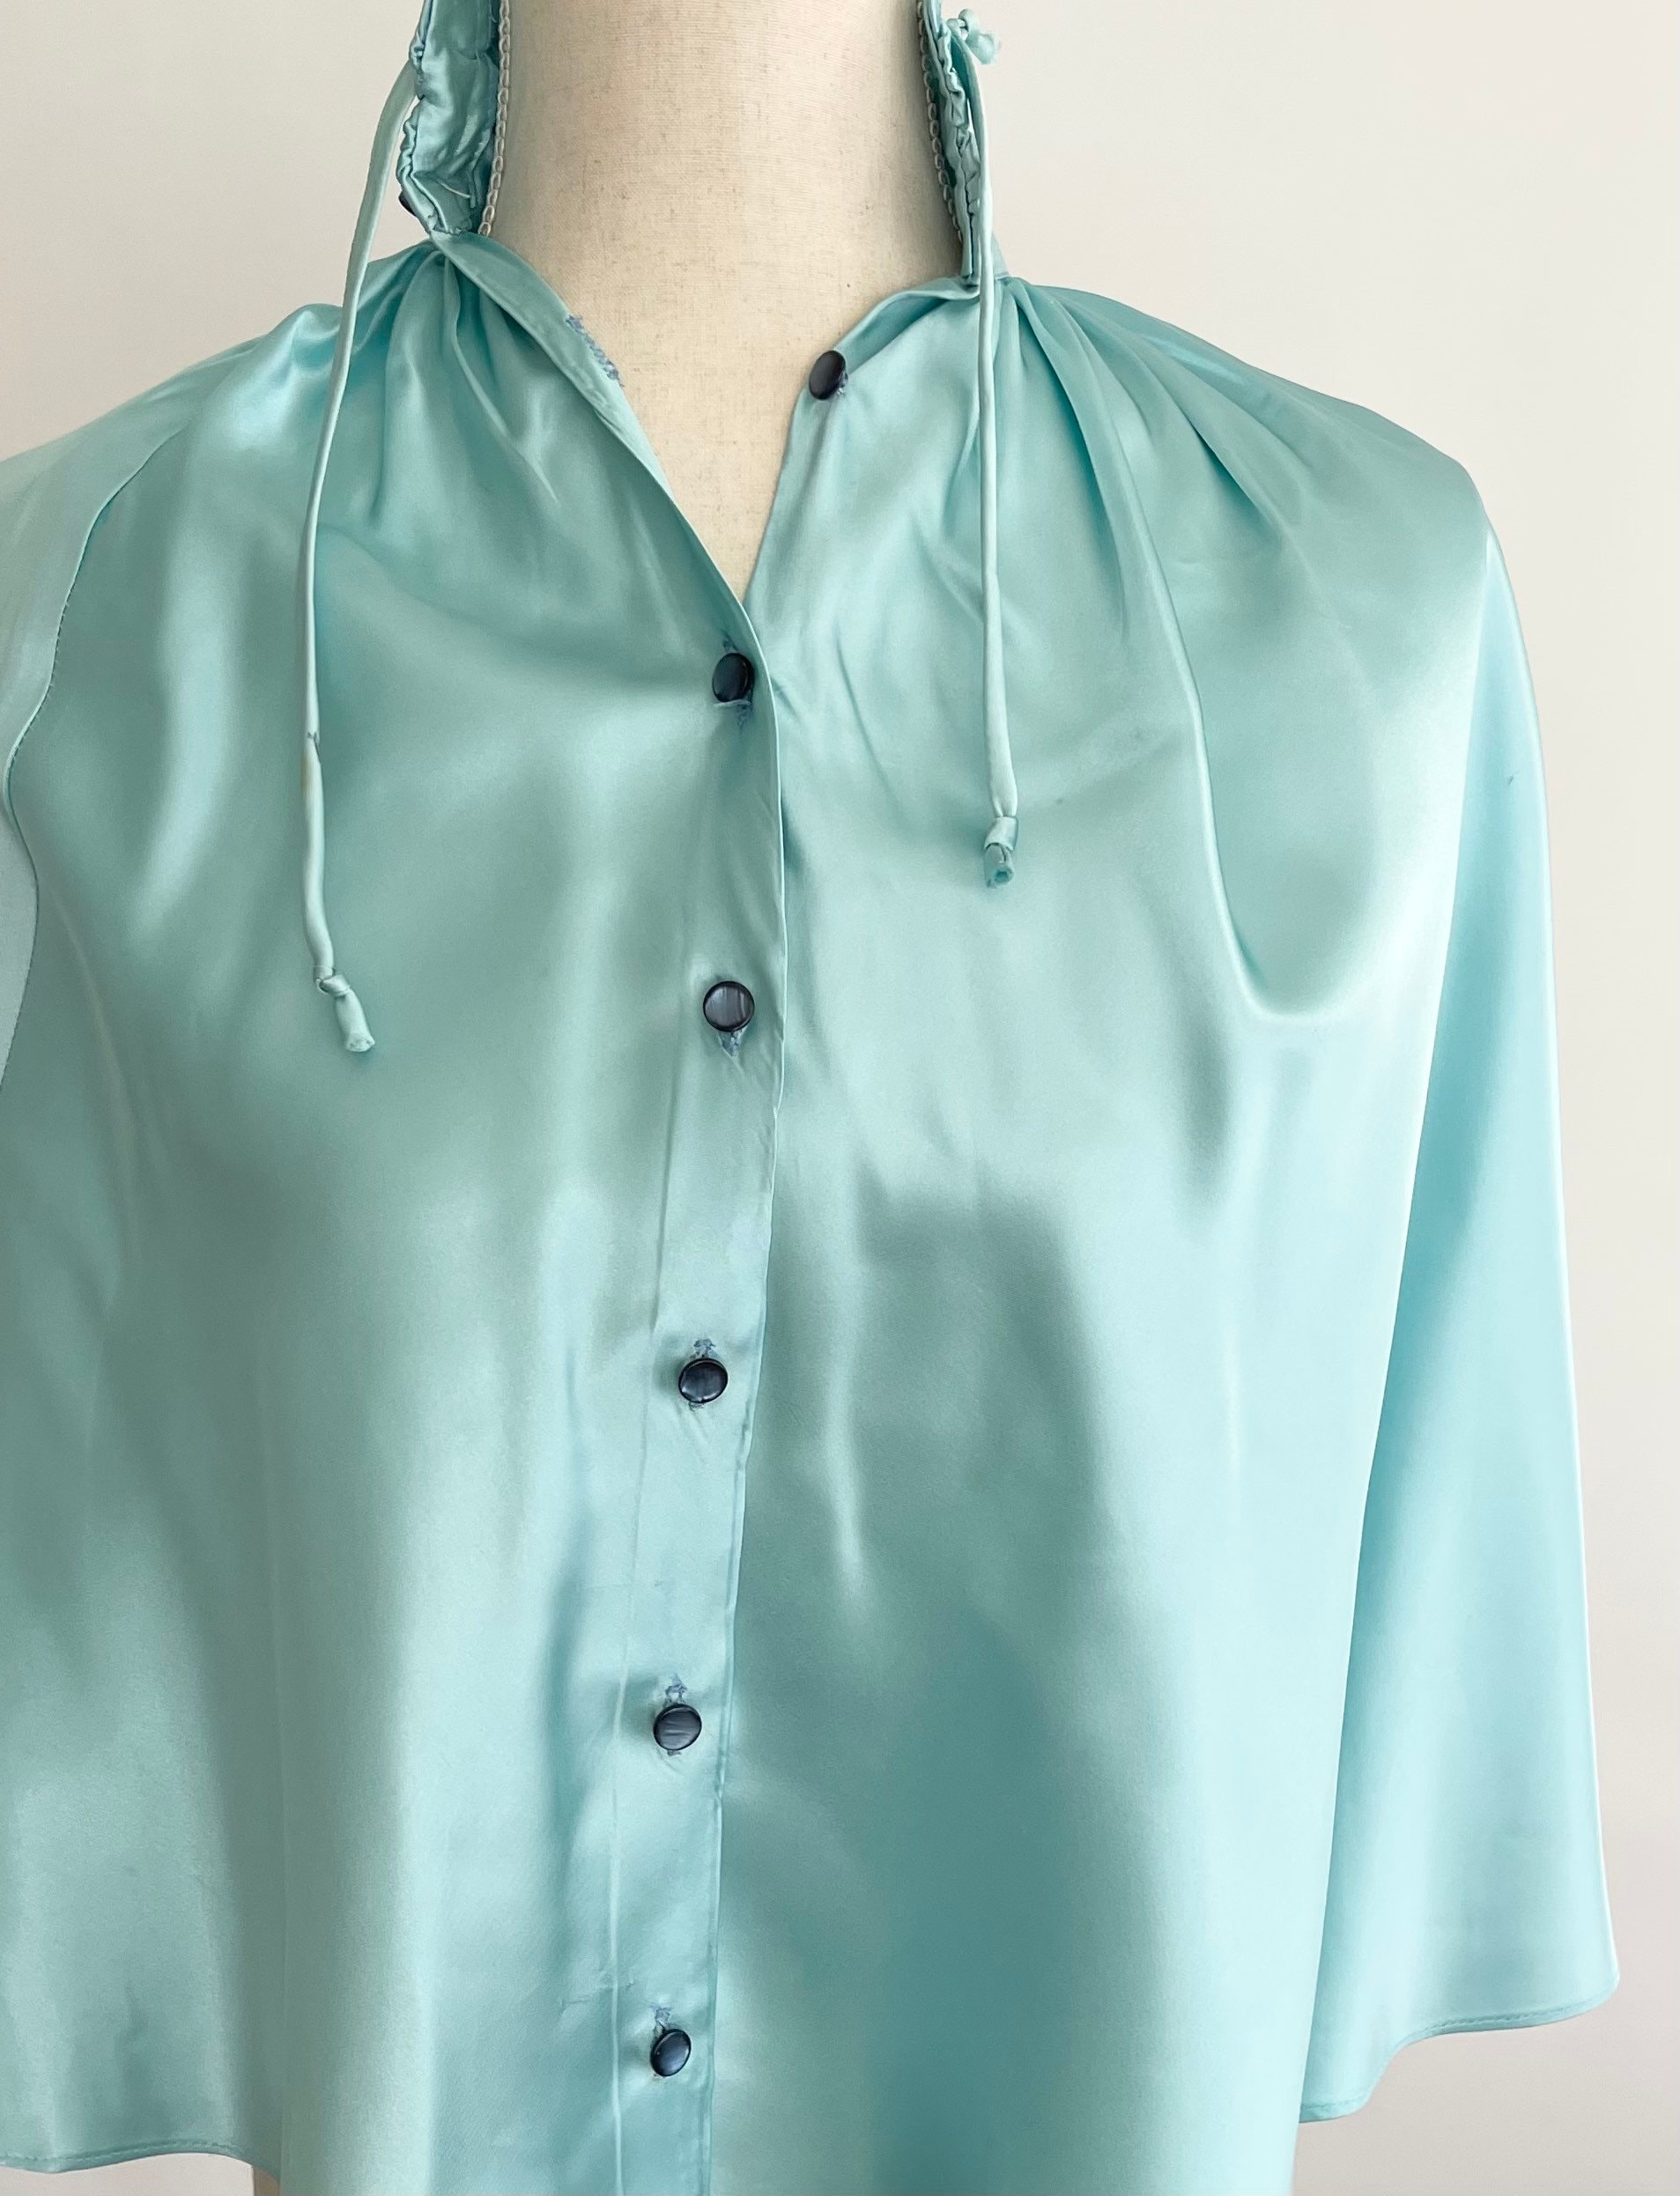 Aqua Satin Bed Jacket Vintage 30s 40s Lingerie Sleepwear High Tie Neck ...